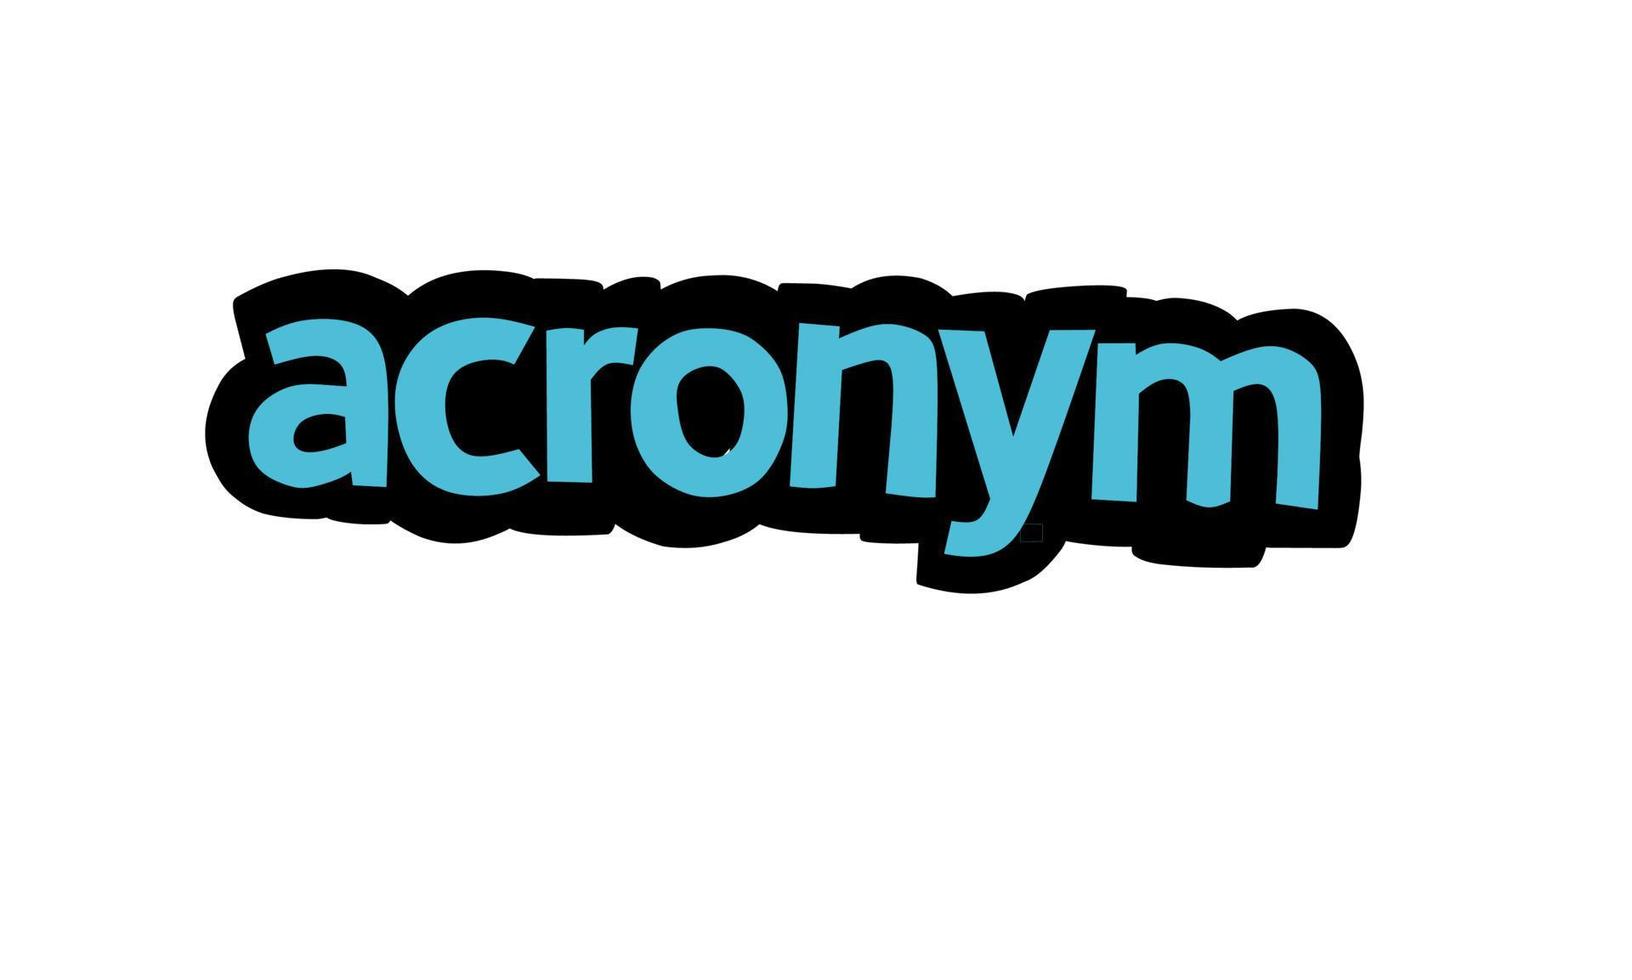 ACRONYM writing vector design on white background